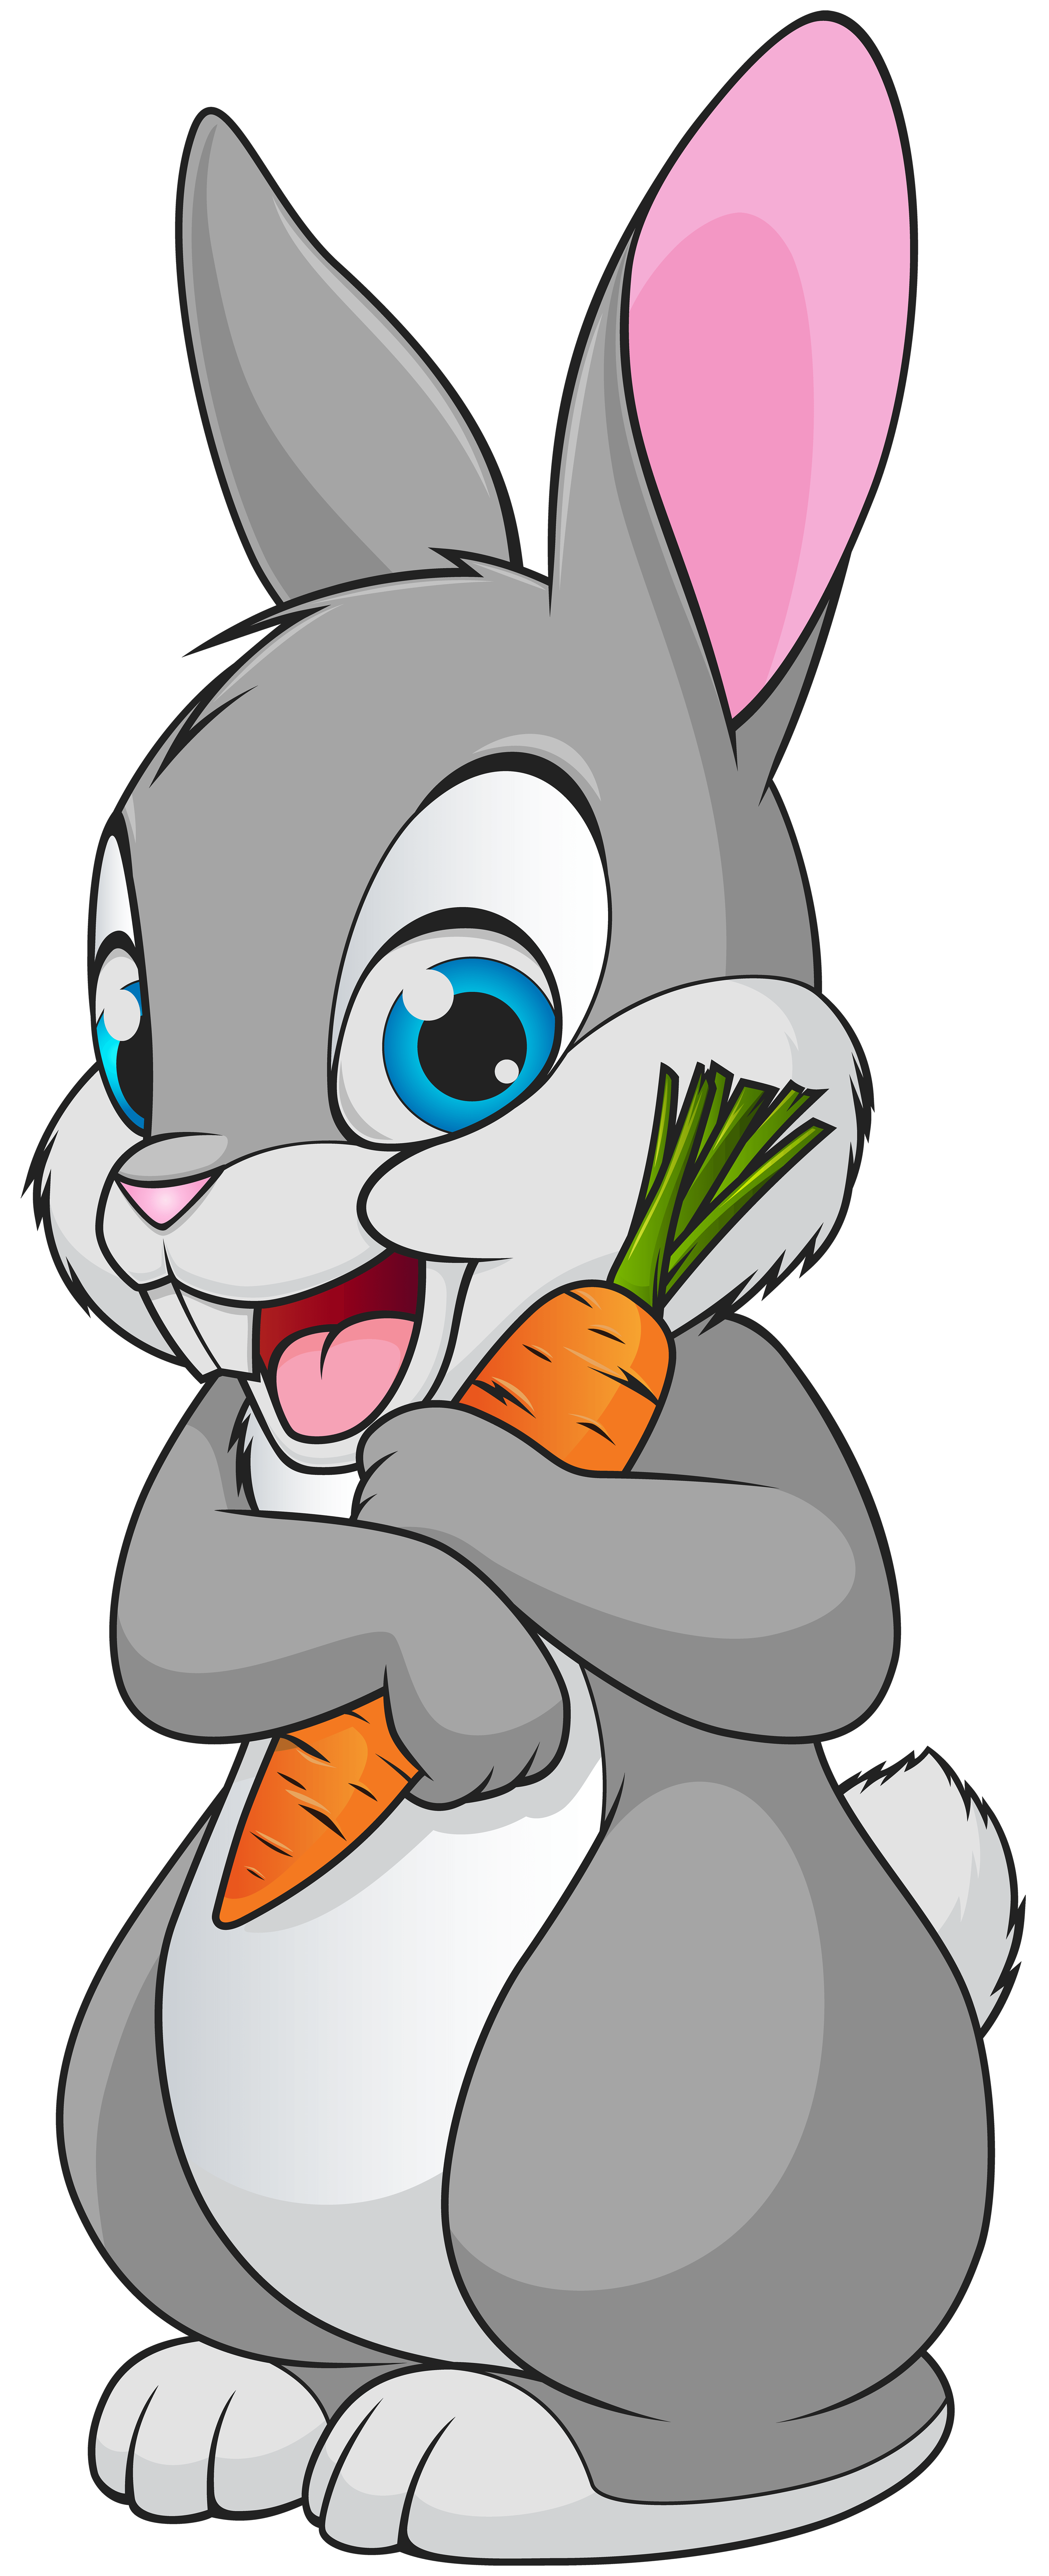 Cartoon Cute Bunny Pictures Cartoon Cute Vector Illustration Rabbits Bunny Rabbit Easy Blue